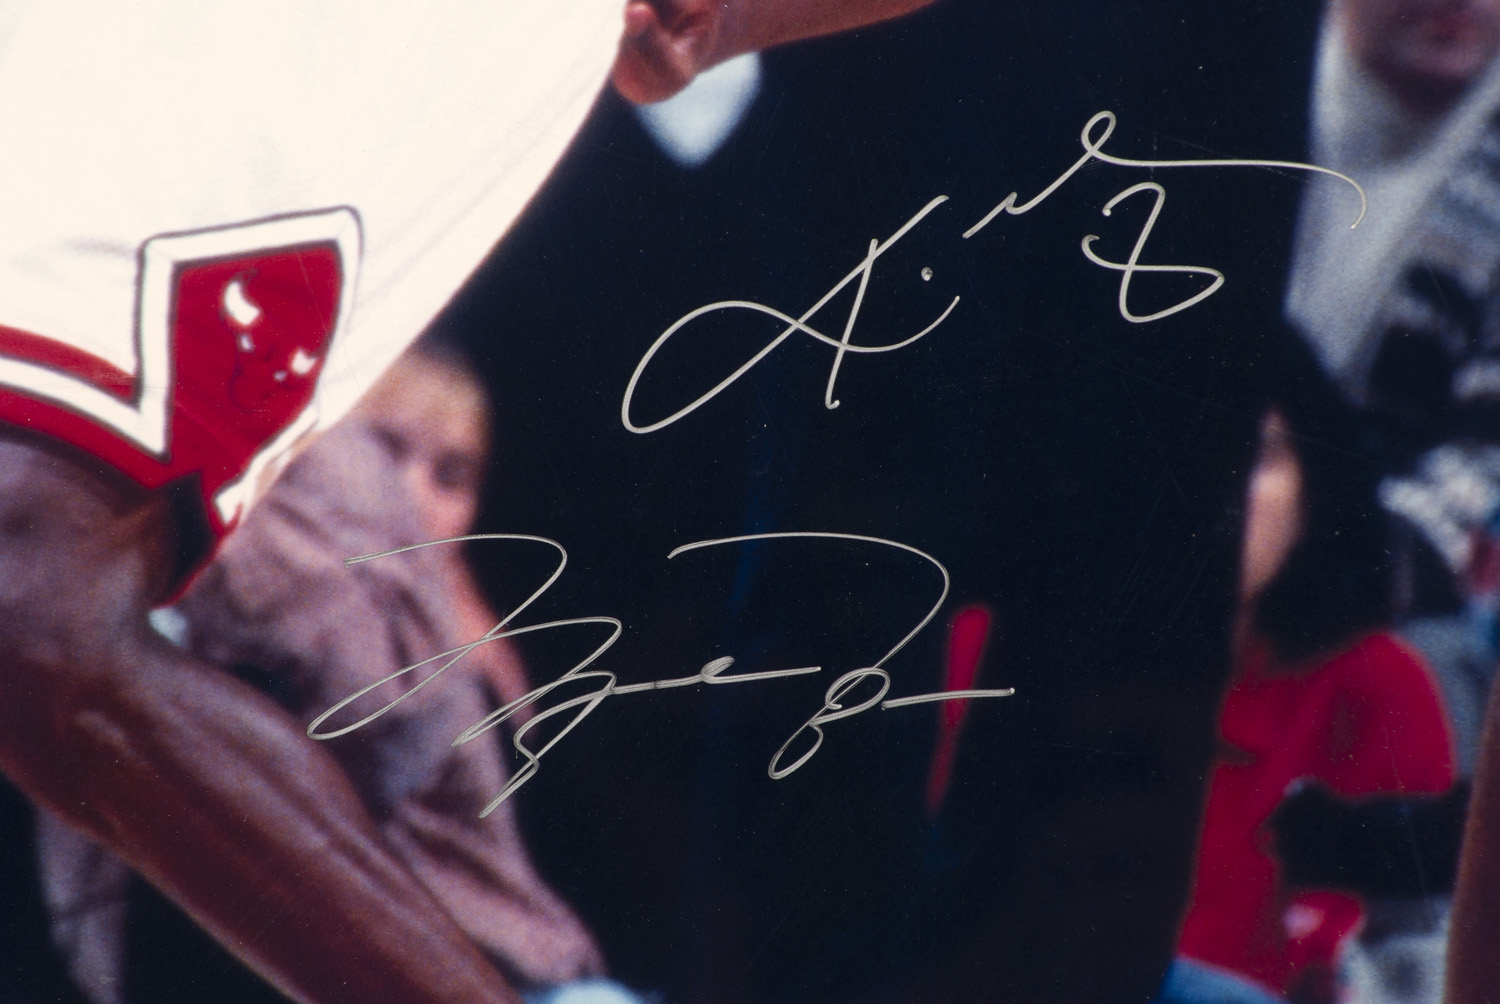 Photograph Signed by Michael Jordan and Kobe Bryant - CharityStars